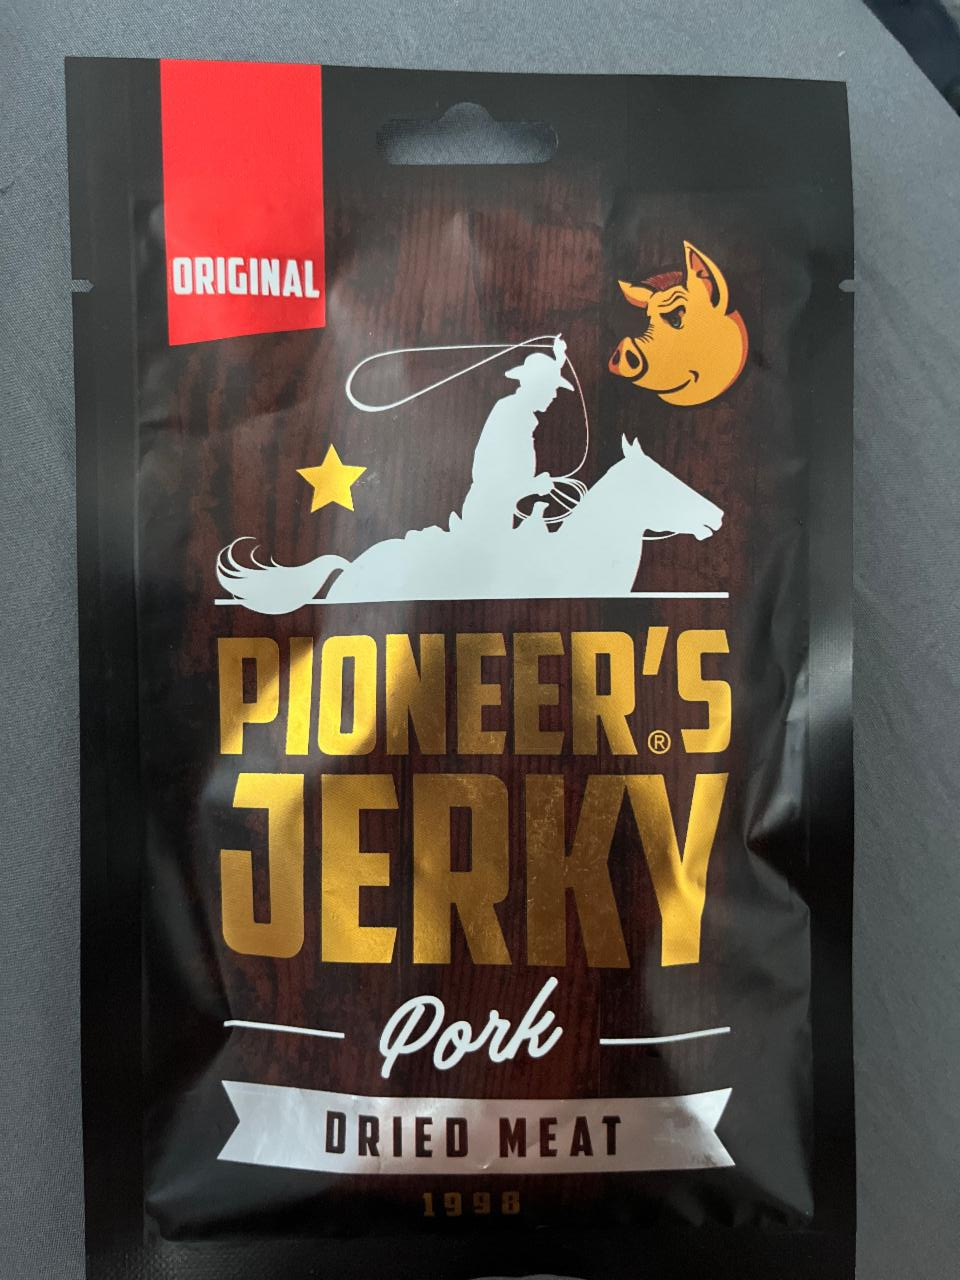 Fotografie - Pioneer’s Jerky Pork Original